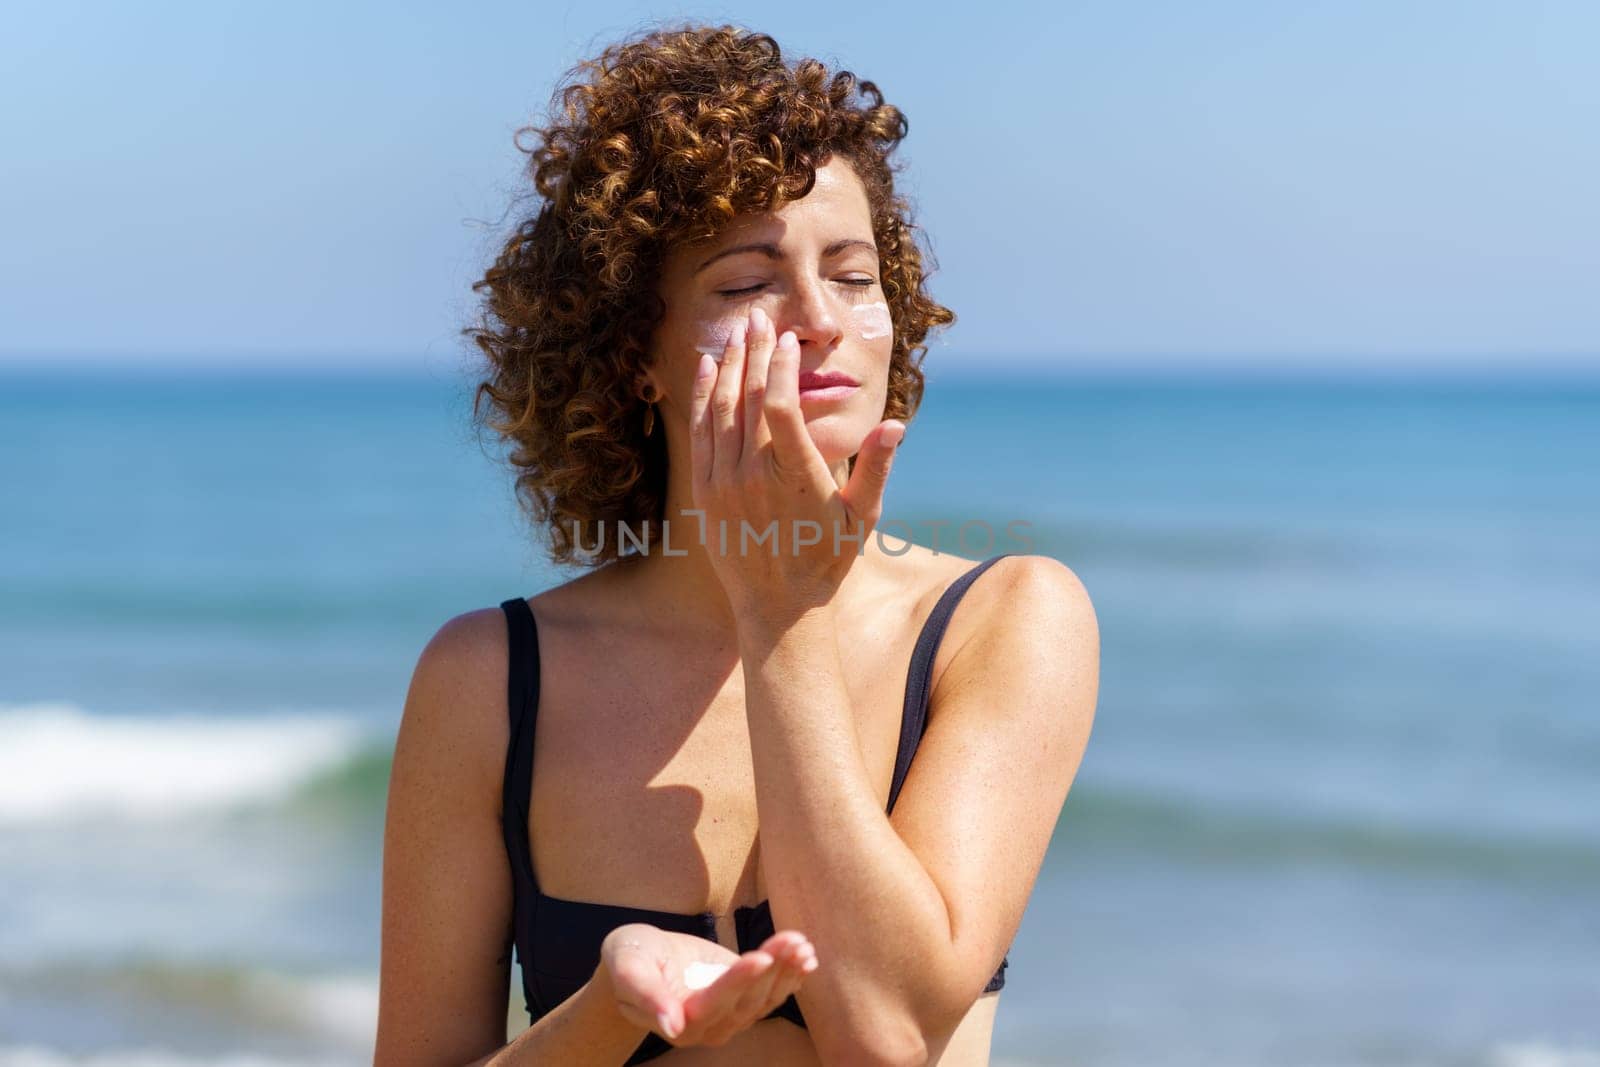 Sensual woman in bikini standing near waving ocean while applying sunblock cream on face during summer vacation